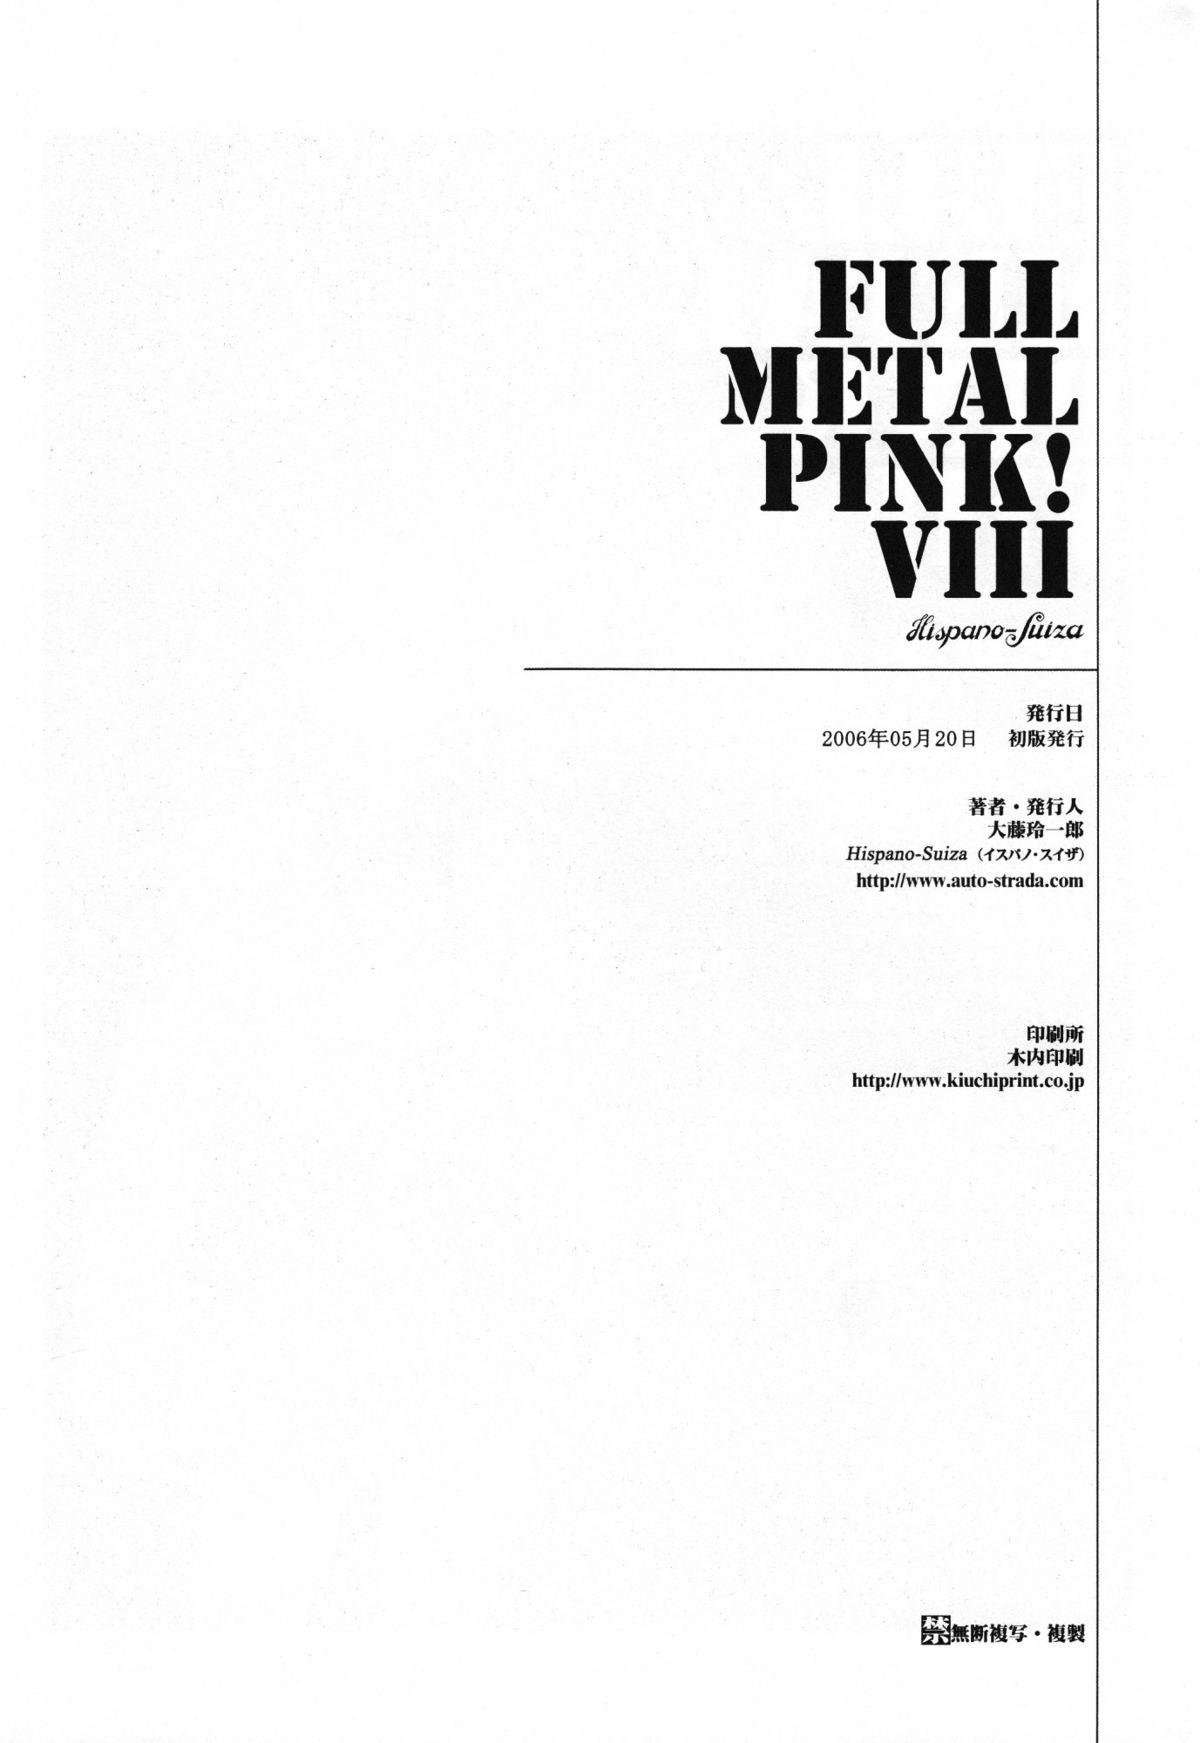 Full Metal Pink! VIII 28